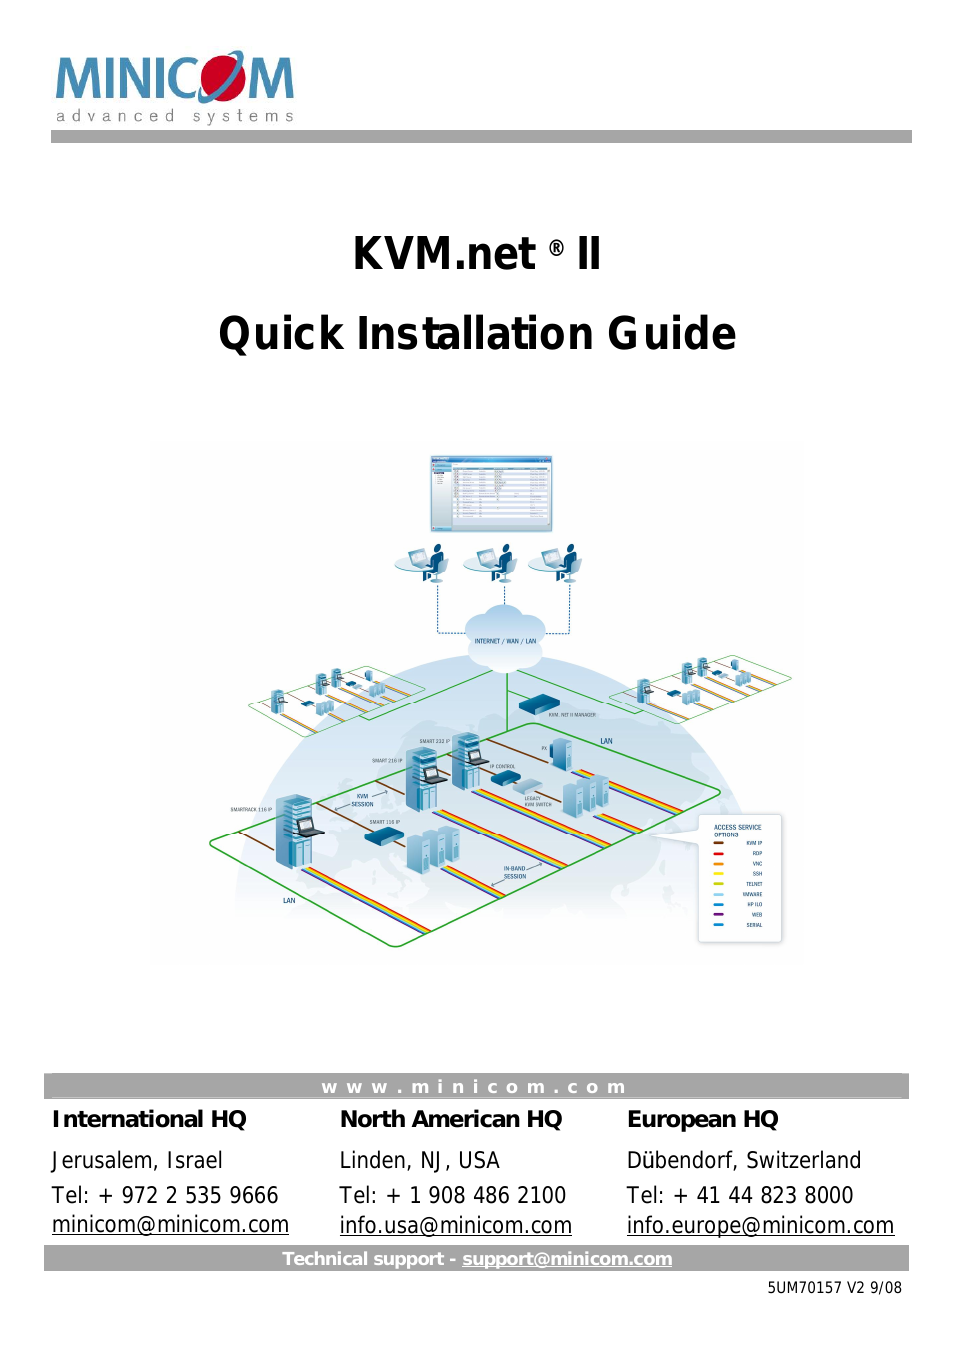 Central Management Appliance KVM.net II